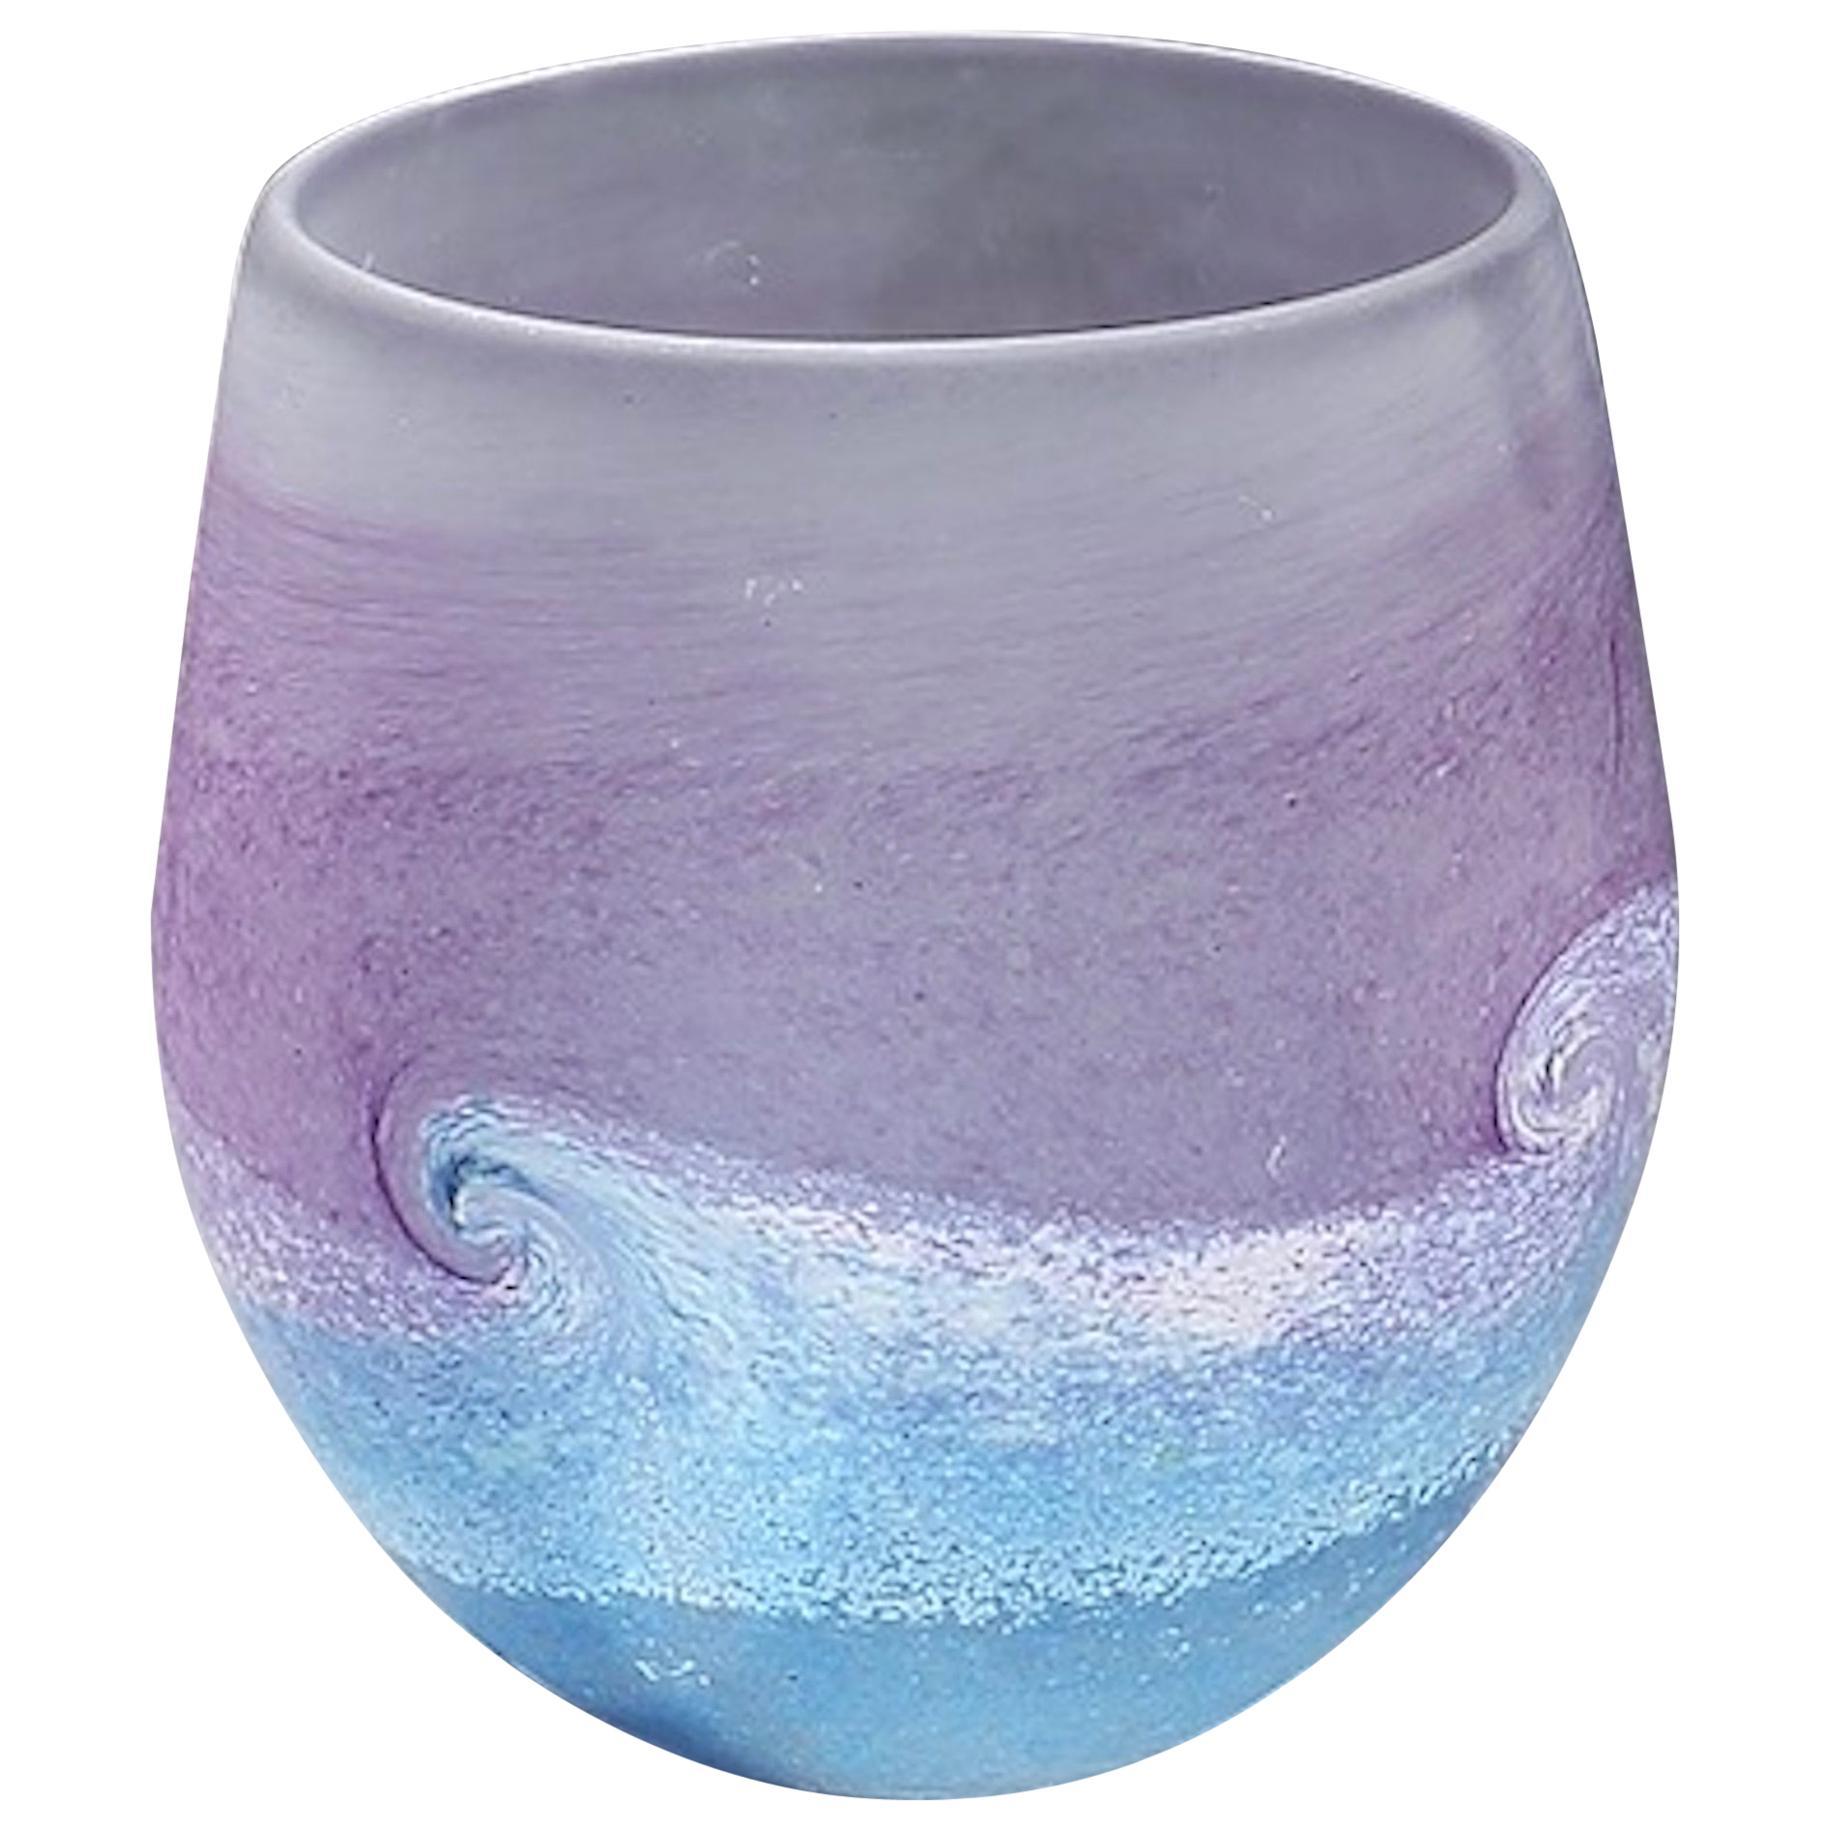 Norman Stuart Clarke, Vase Wave Seascape in Blau, Lila und Weiß, 1997